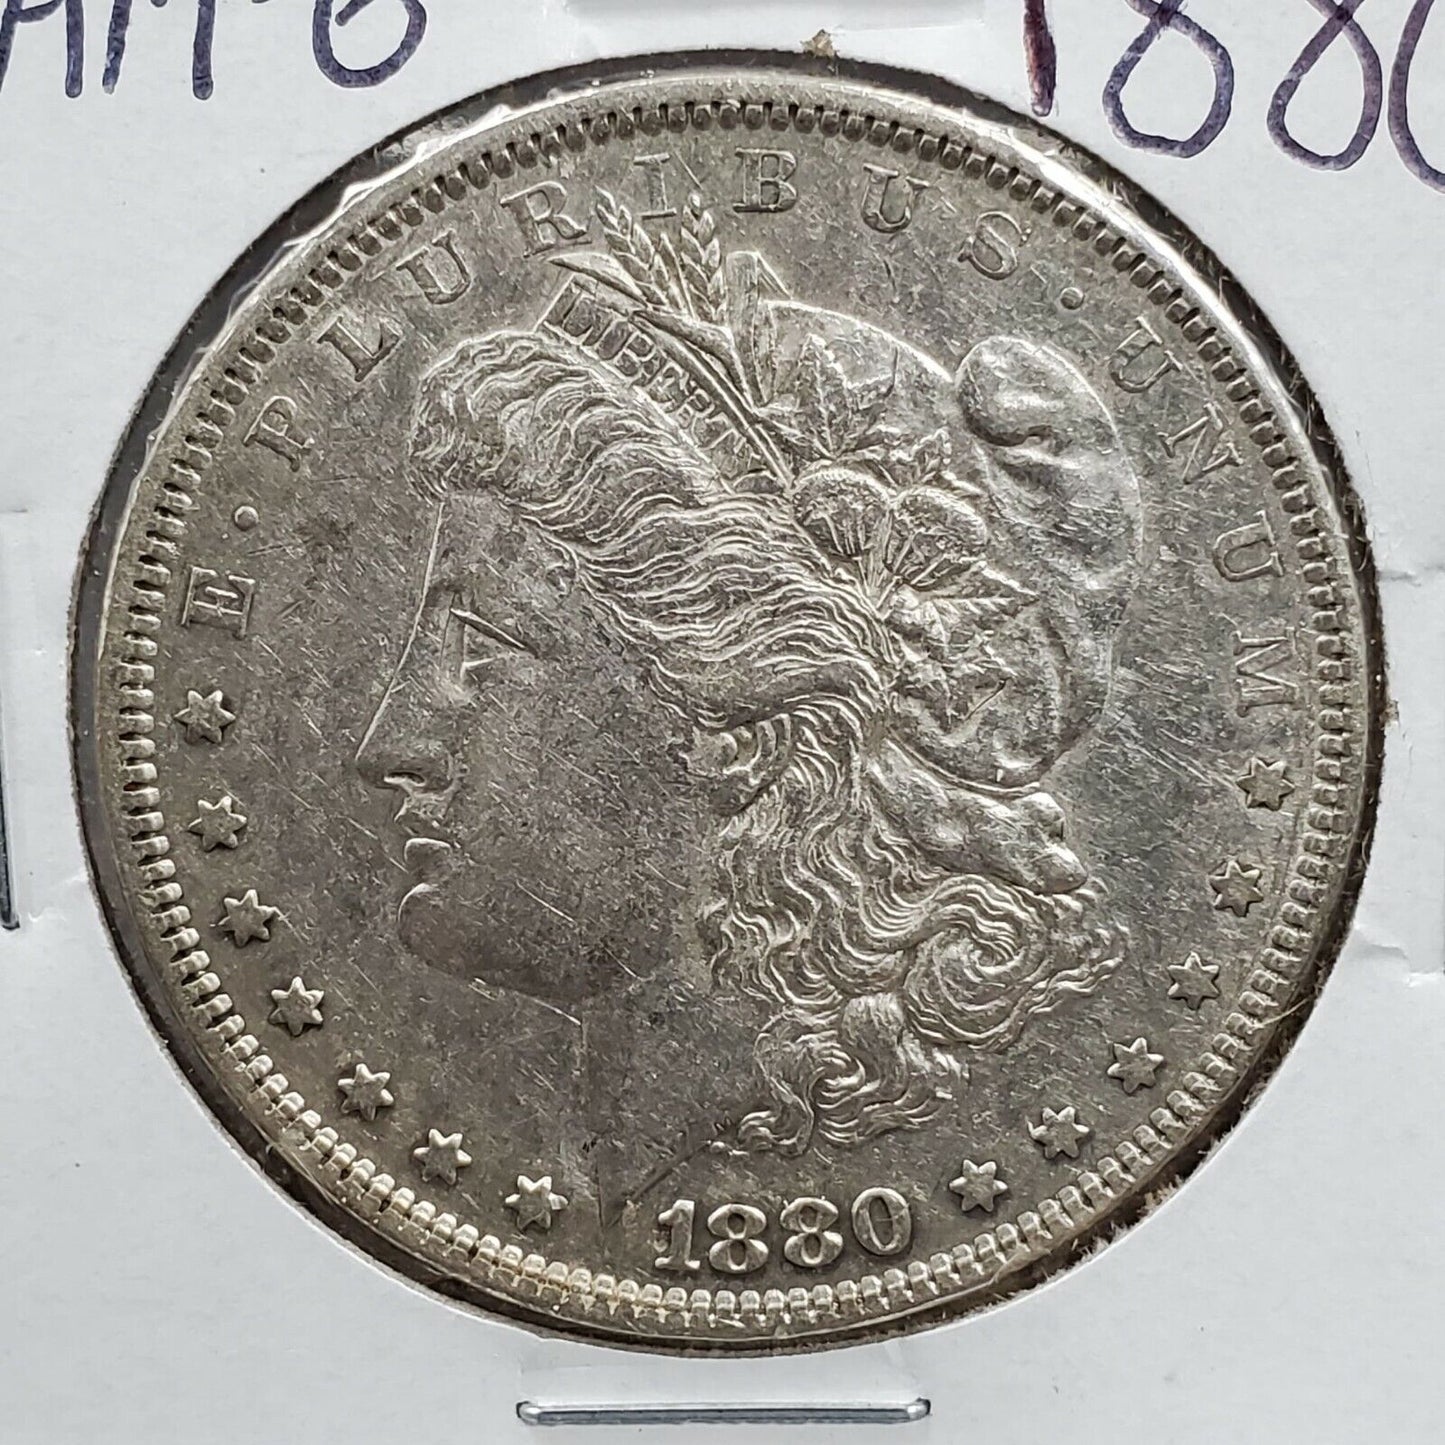 1880 P Morgan Silver Eagle Dollar Coin XF / AU Details VAM 6 8/7 Spikes Variety